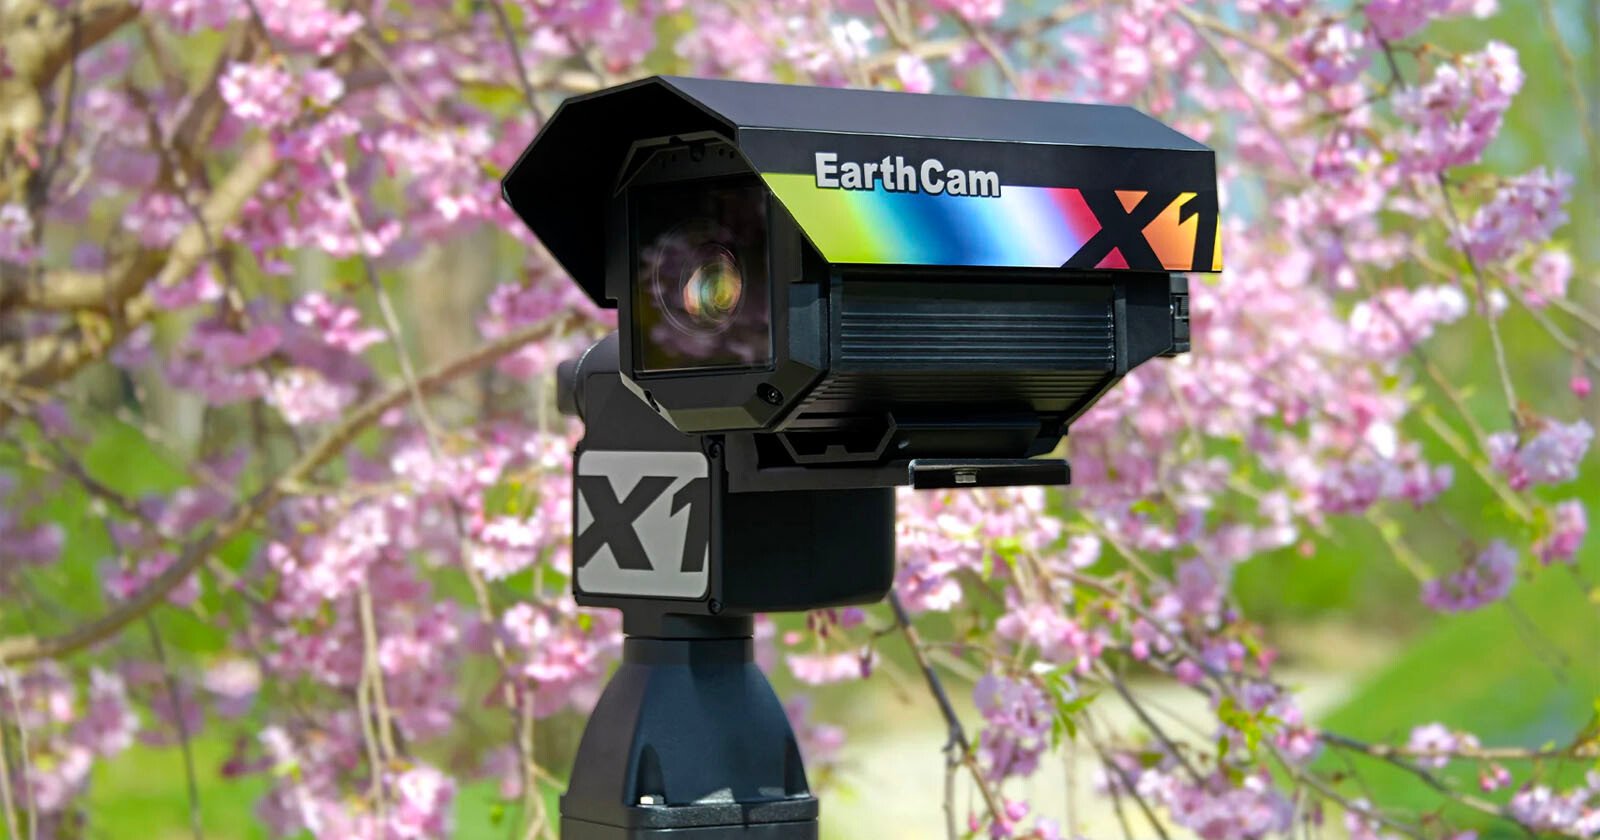 EarthCams New X1 Shoots 4K and Creates 5 Billion Pixel Panoramas